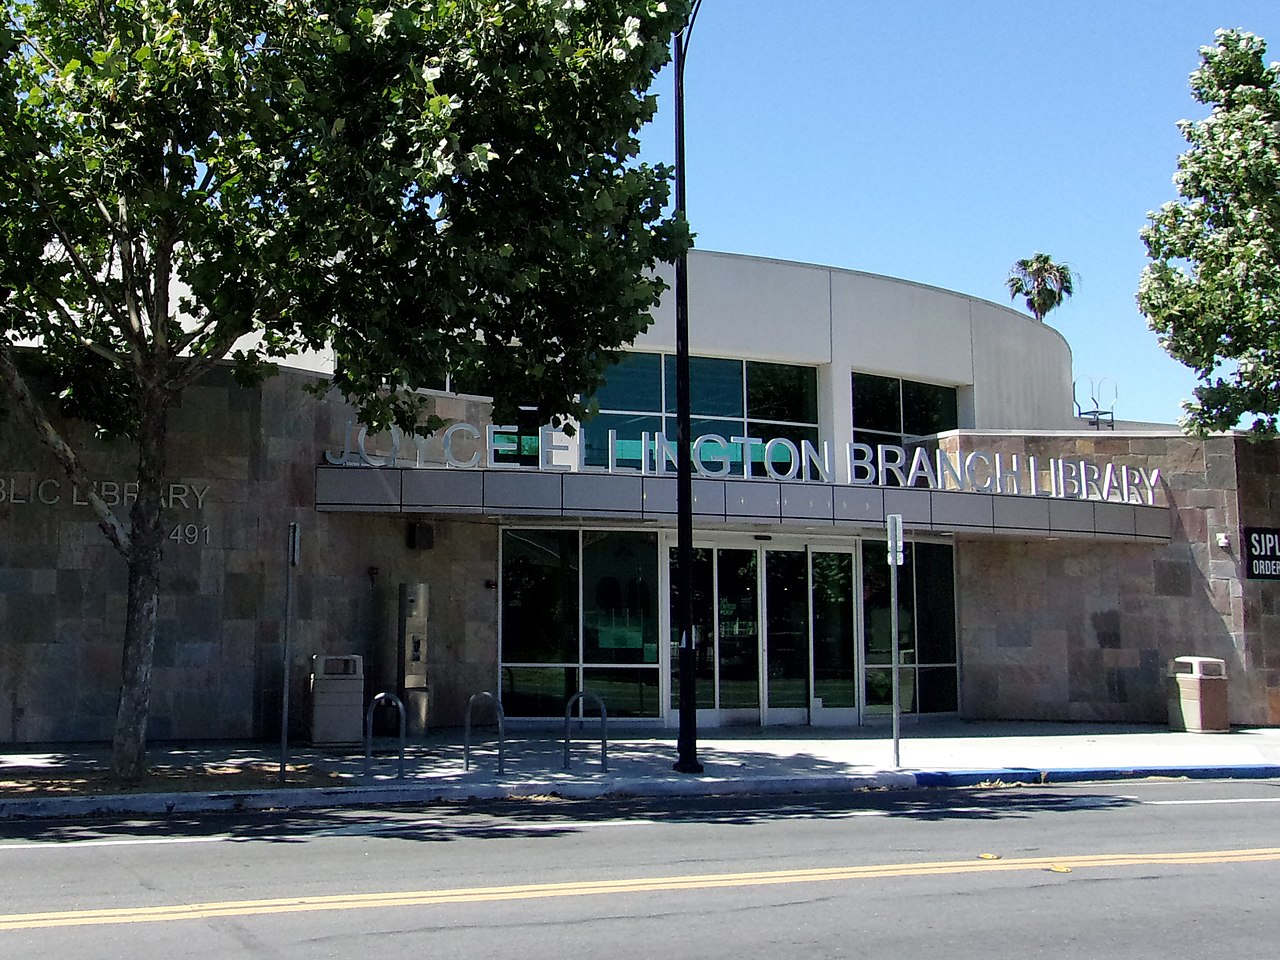 Joyce Ellington Chi nhánh của San Jose Public Library - ngoài